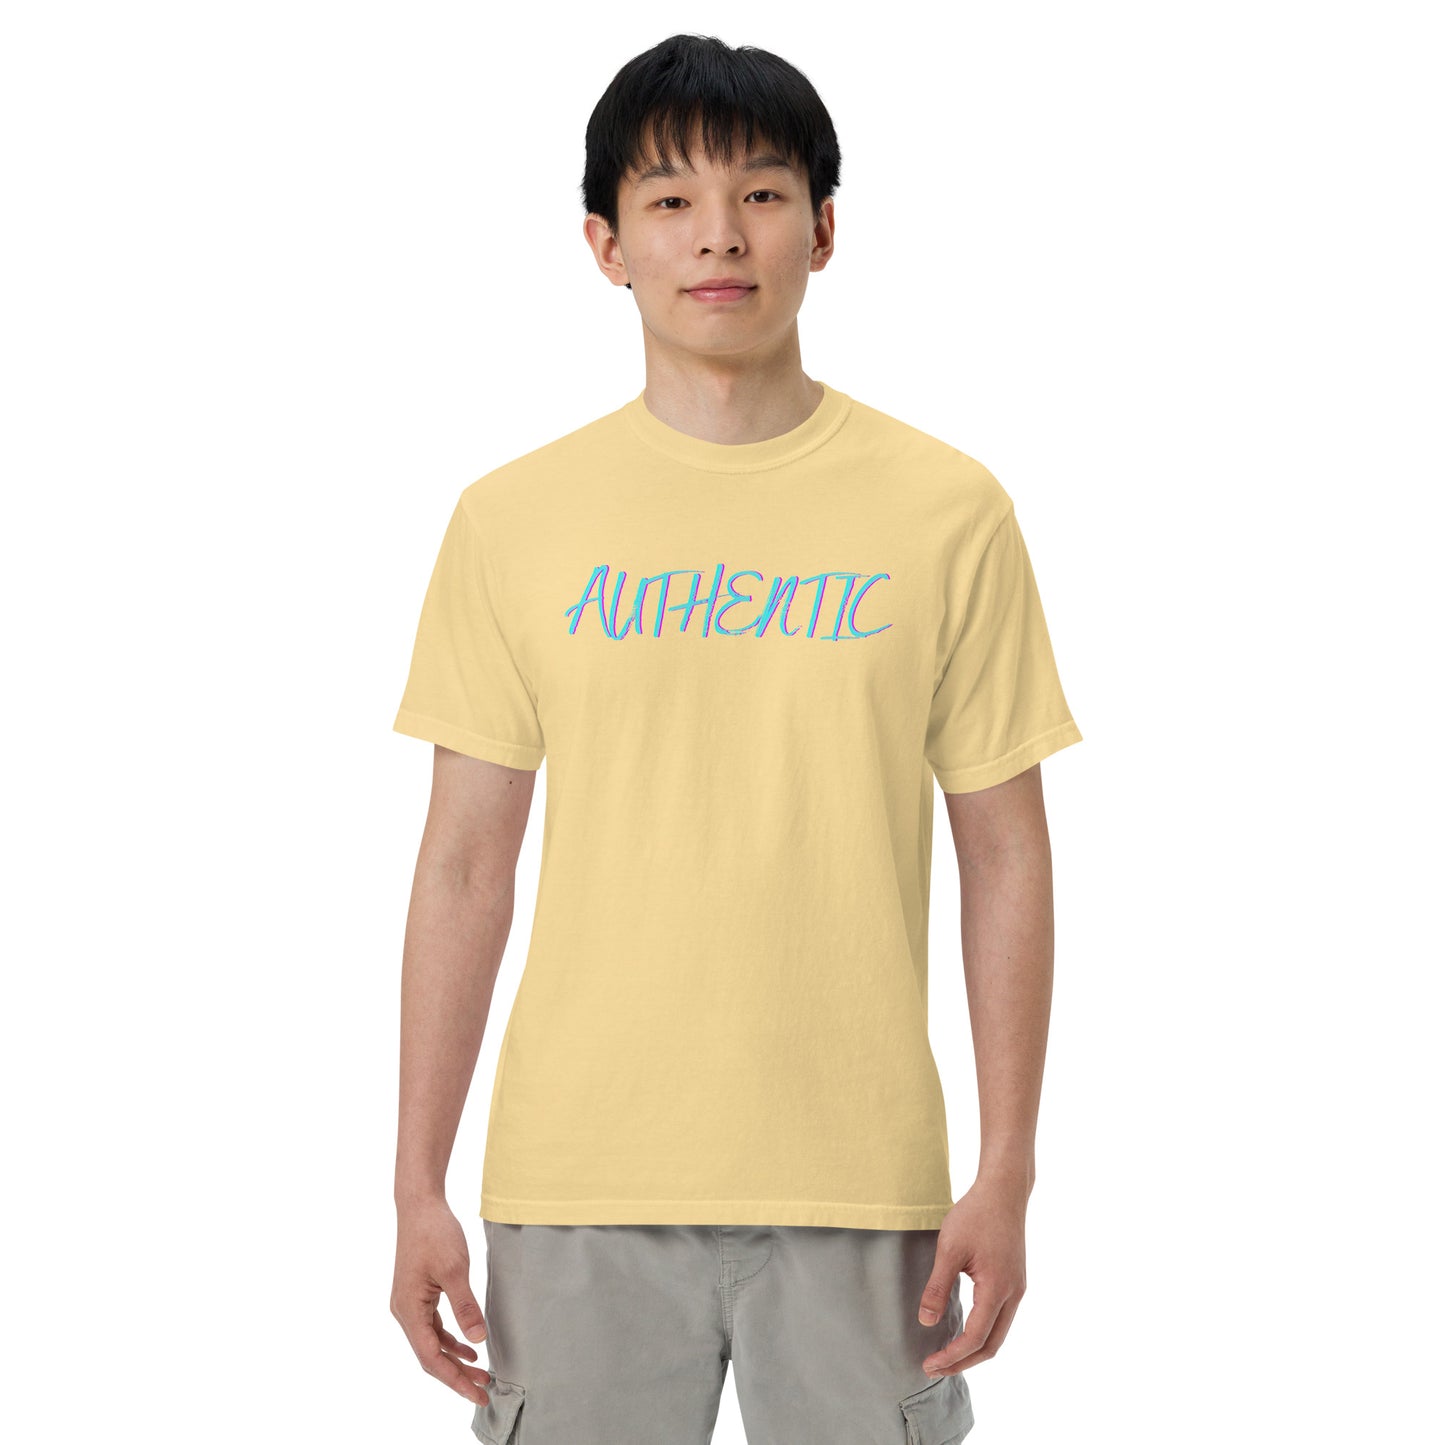 Authentic Men’s garment-dyed heavyweight t-shirt